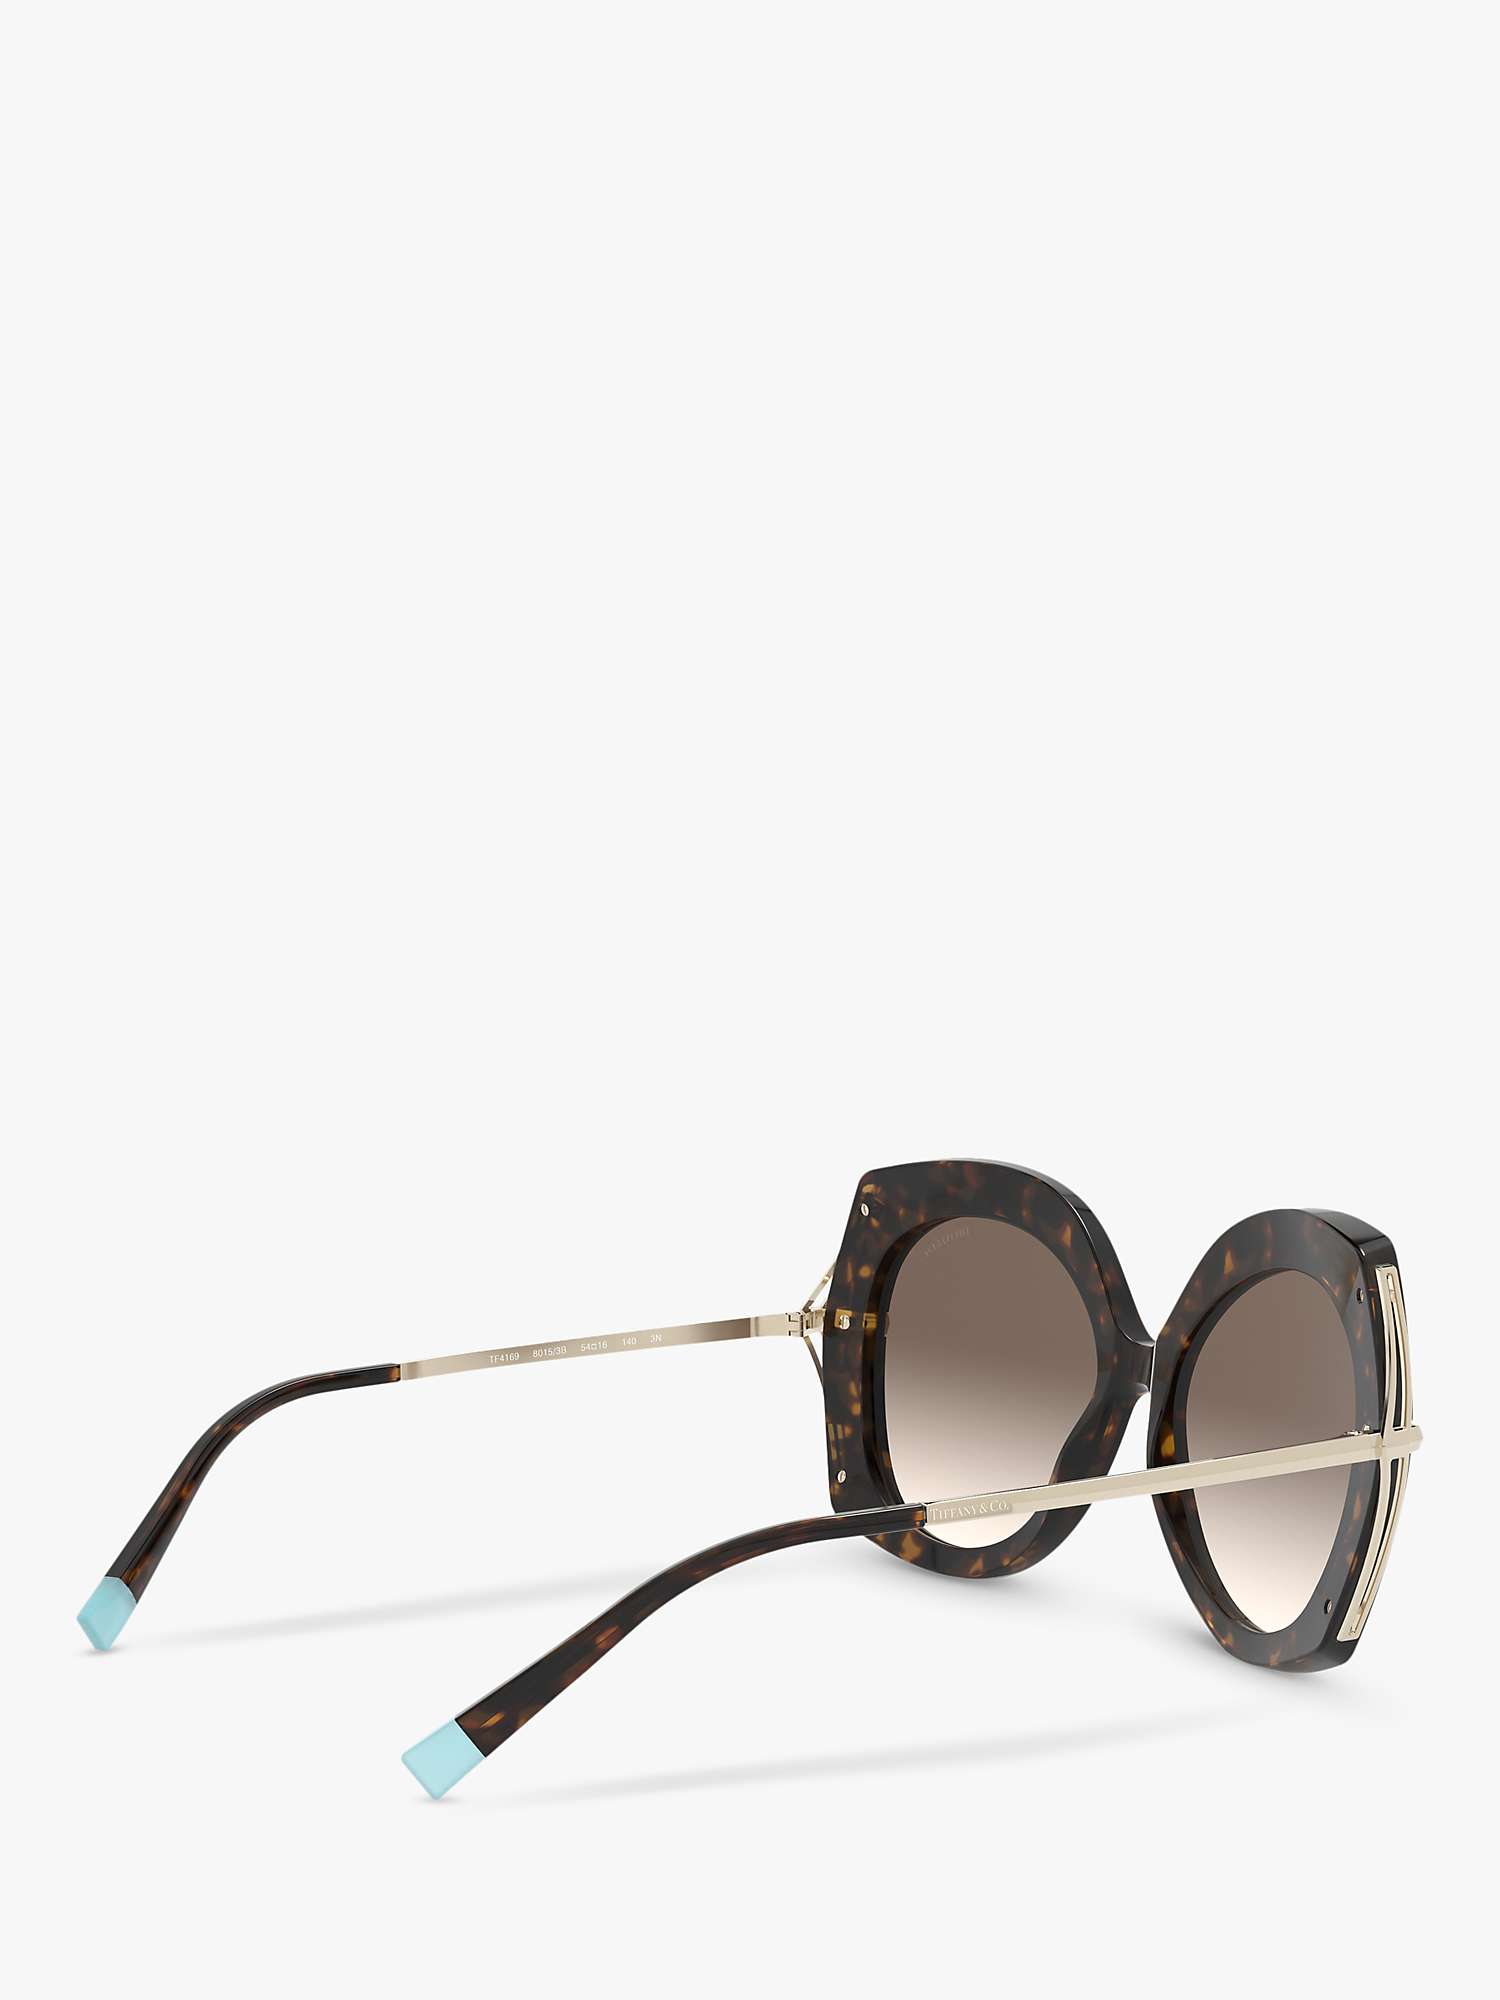 Buy Tiffany & Co TF4169 Women's Irregular Square Sunglasses, Dark Havana/Brown Gradient Online at johnlewis.com